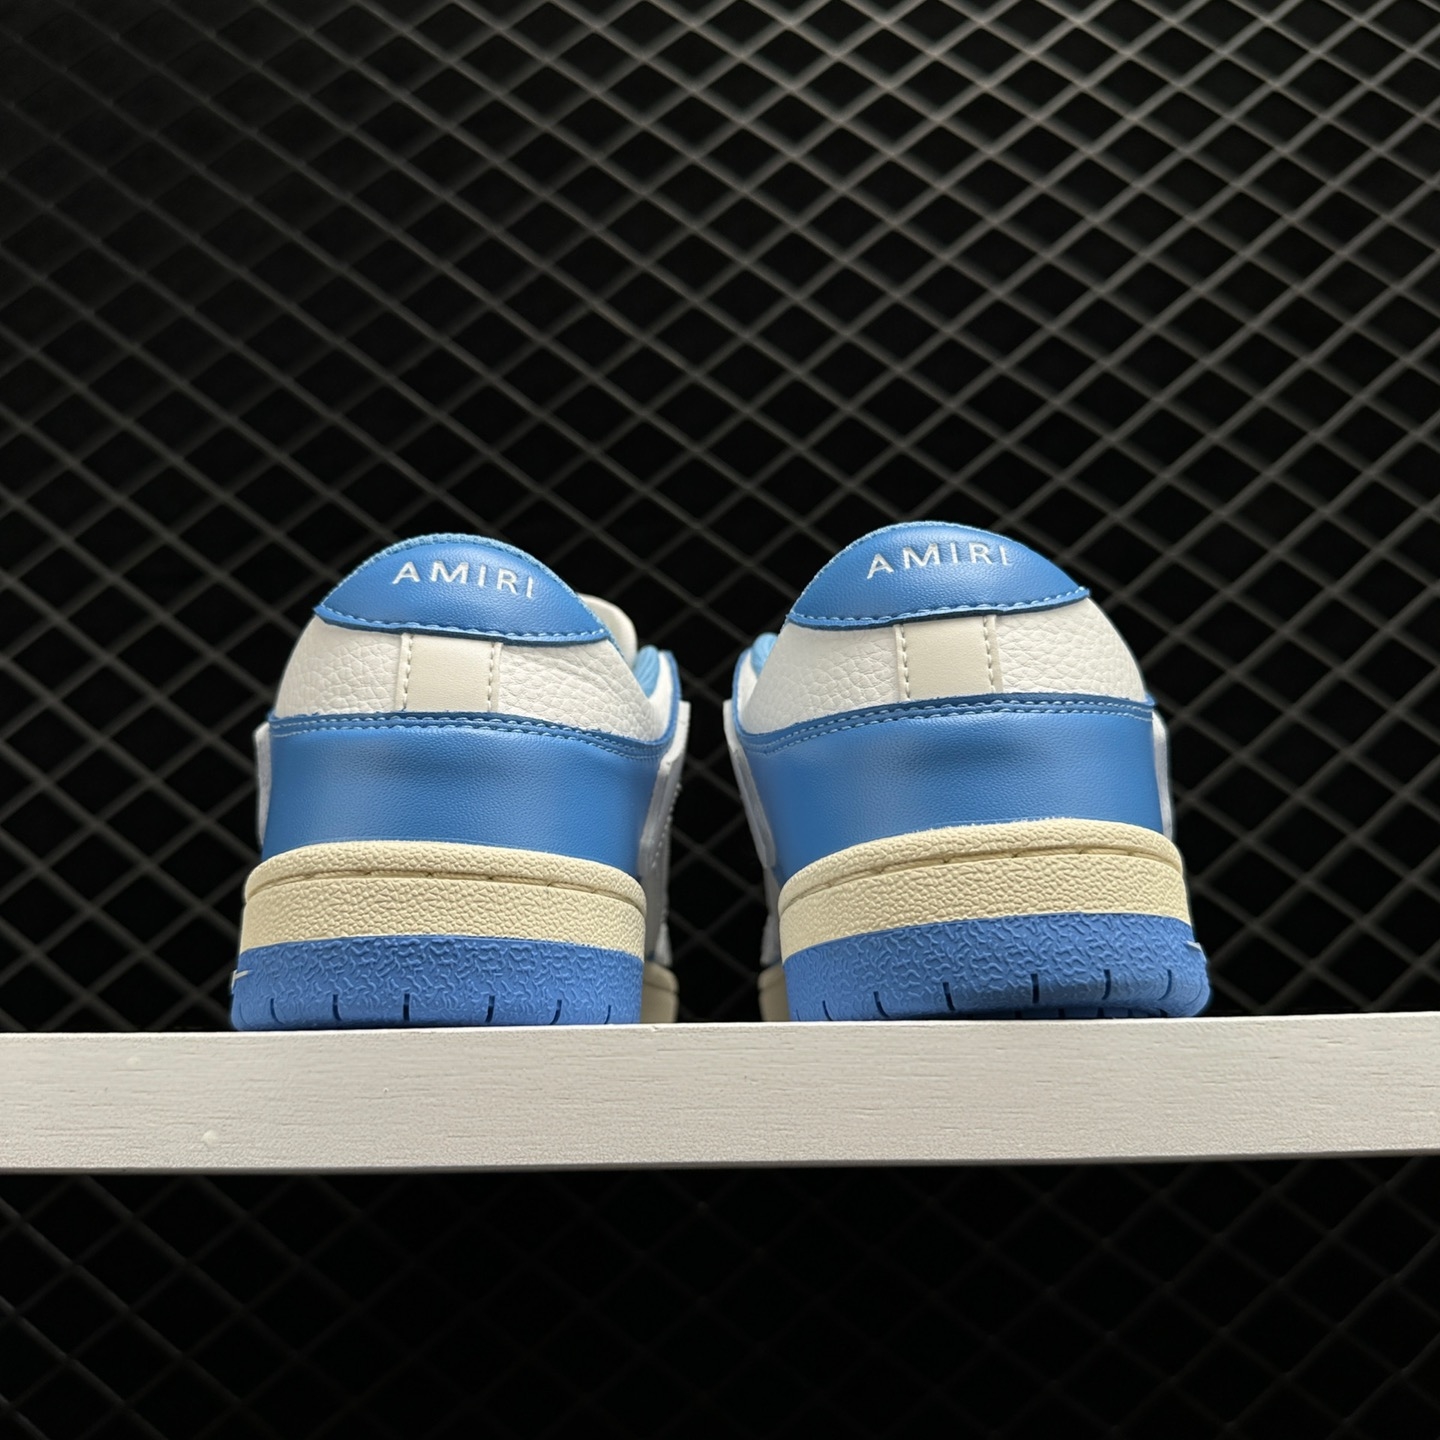 Amiri Skel Top Low Powder Blue MFS003 462 - Premium Sneakers for All Occasions